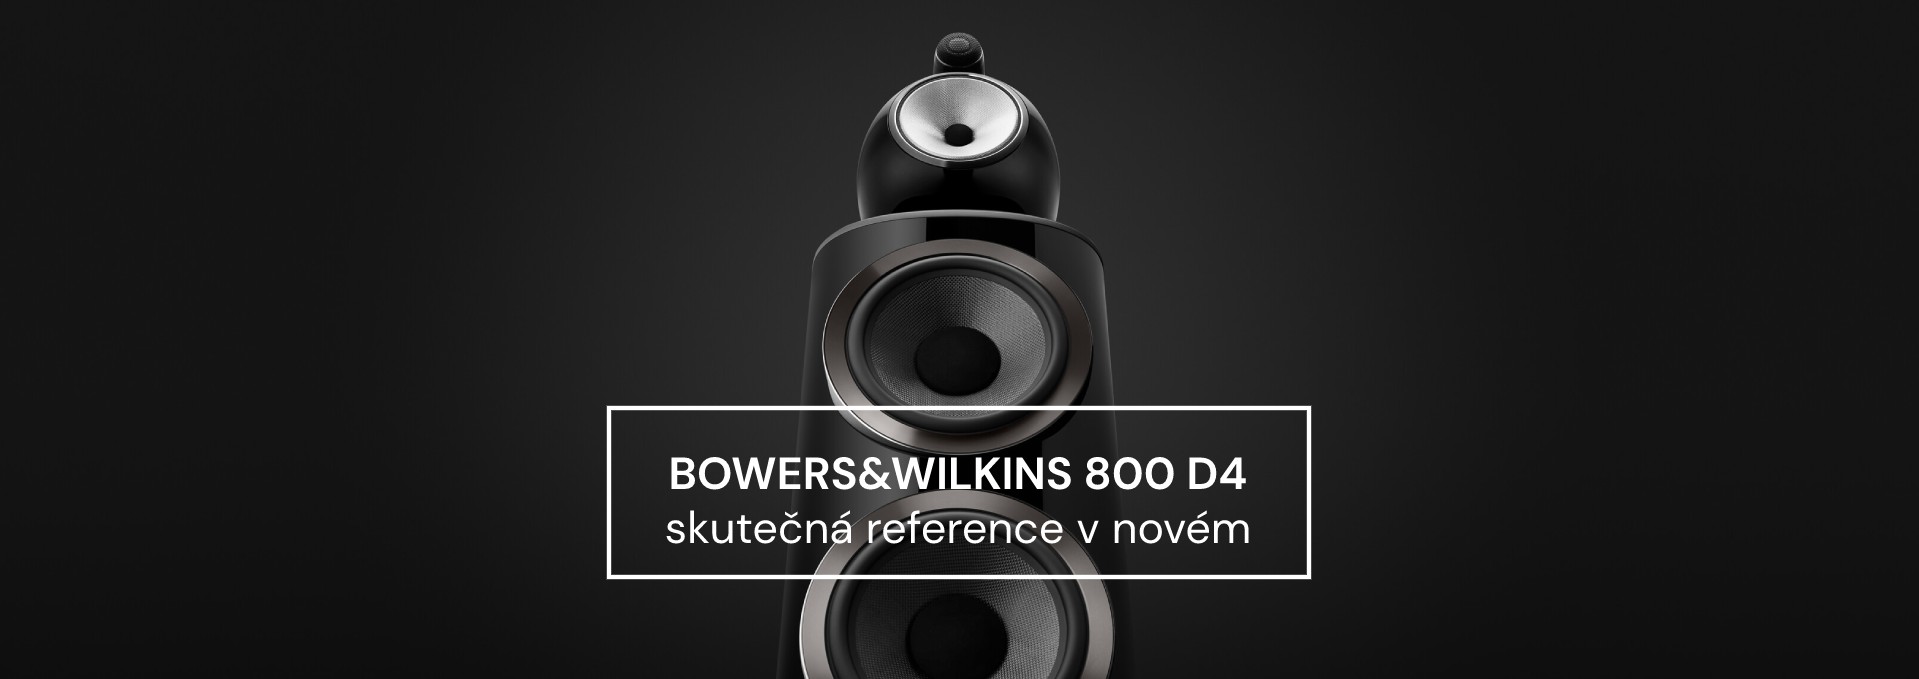 Bowers & Wilkins 800 D4